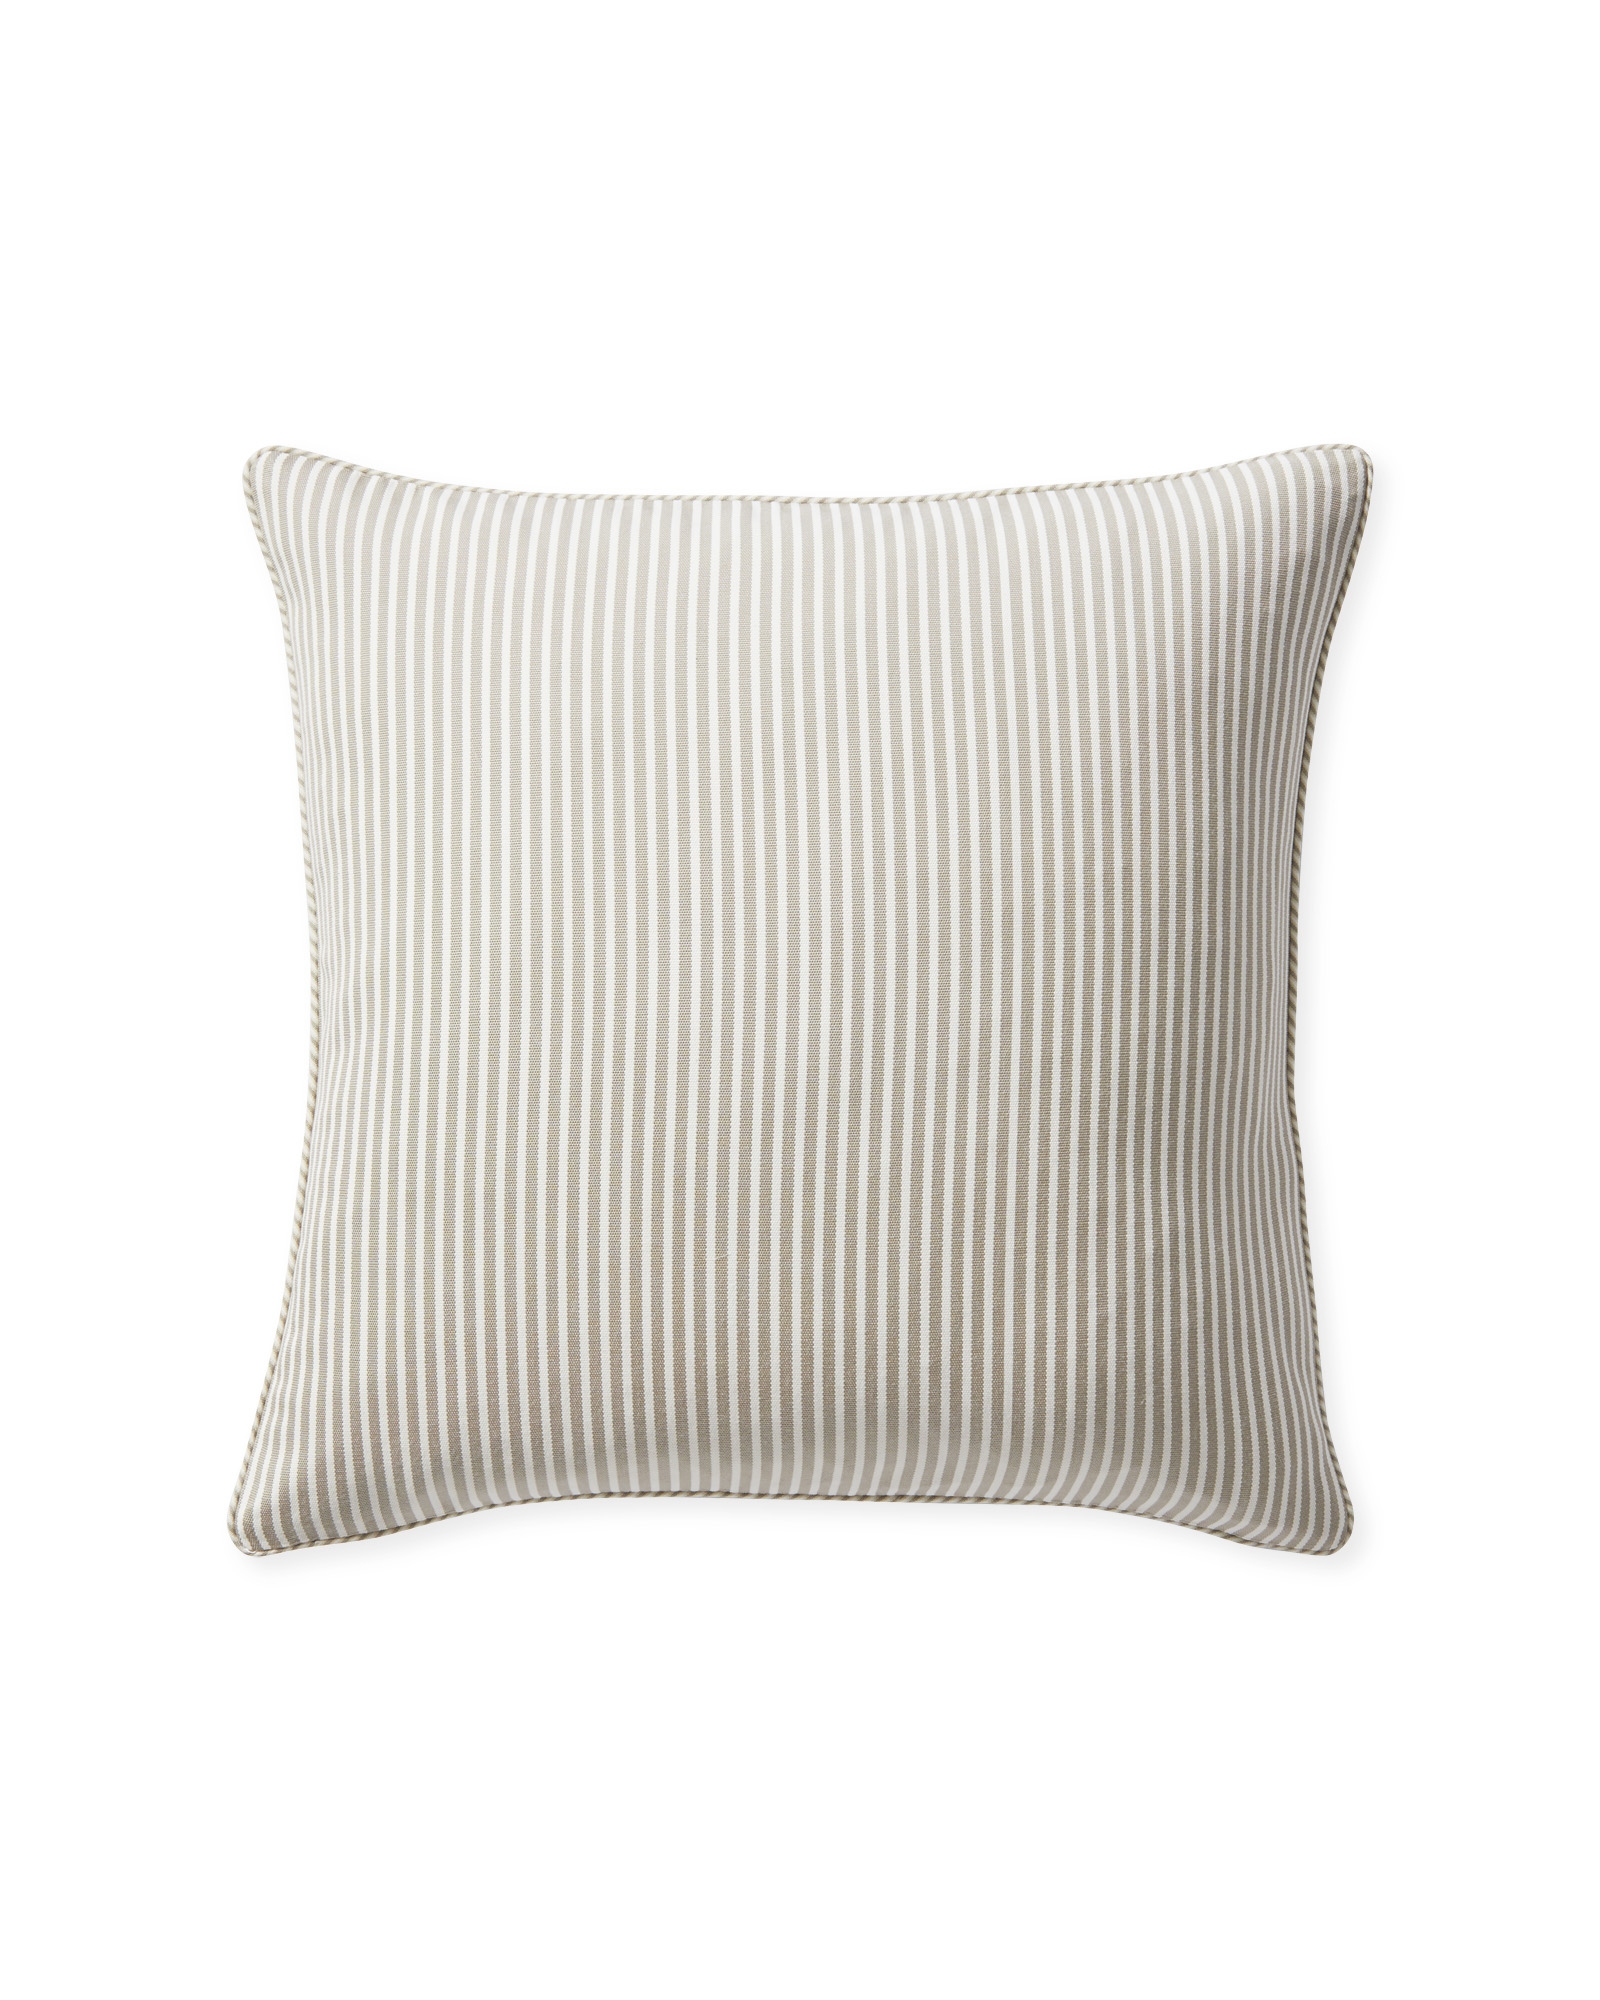 Perennials® Pinstripe Outdoor Pillow Cover - Image 0